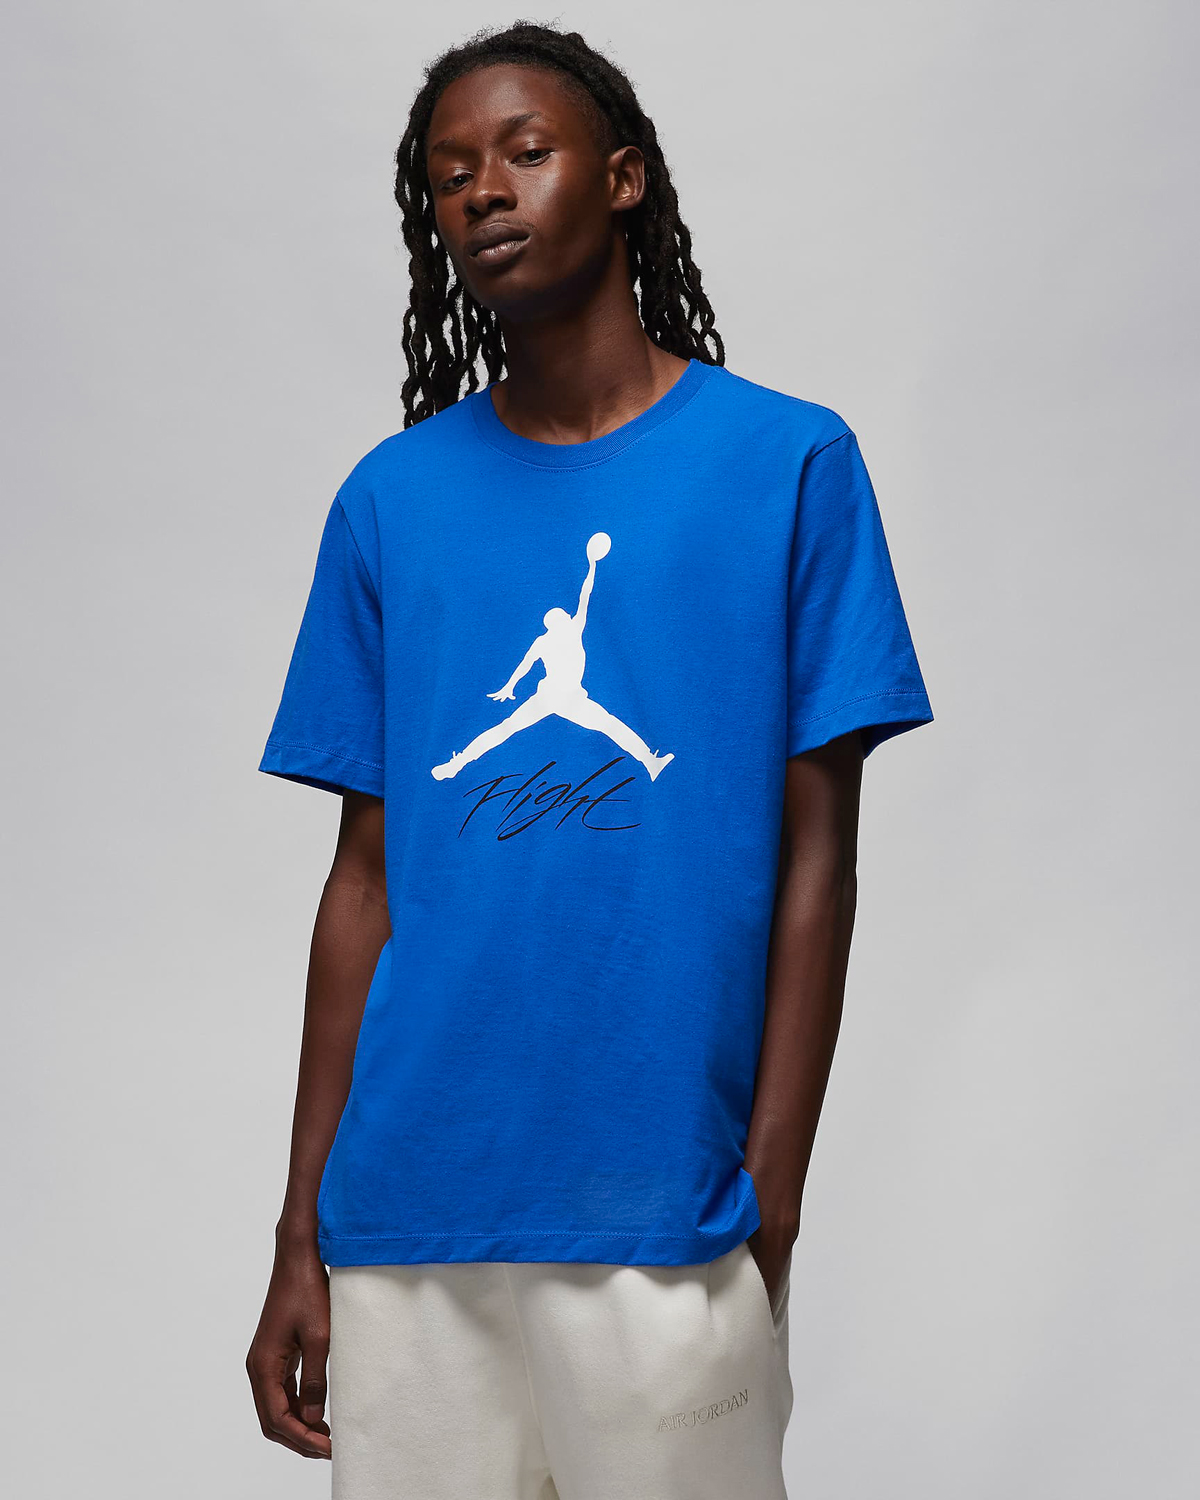 Air Jordan 1 High Royal Reimagined Shirts to Match